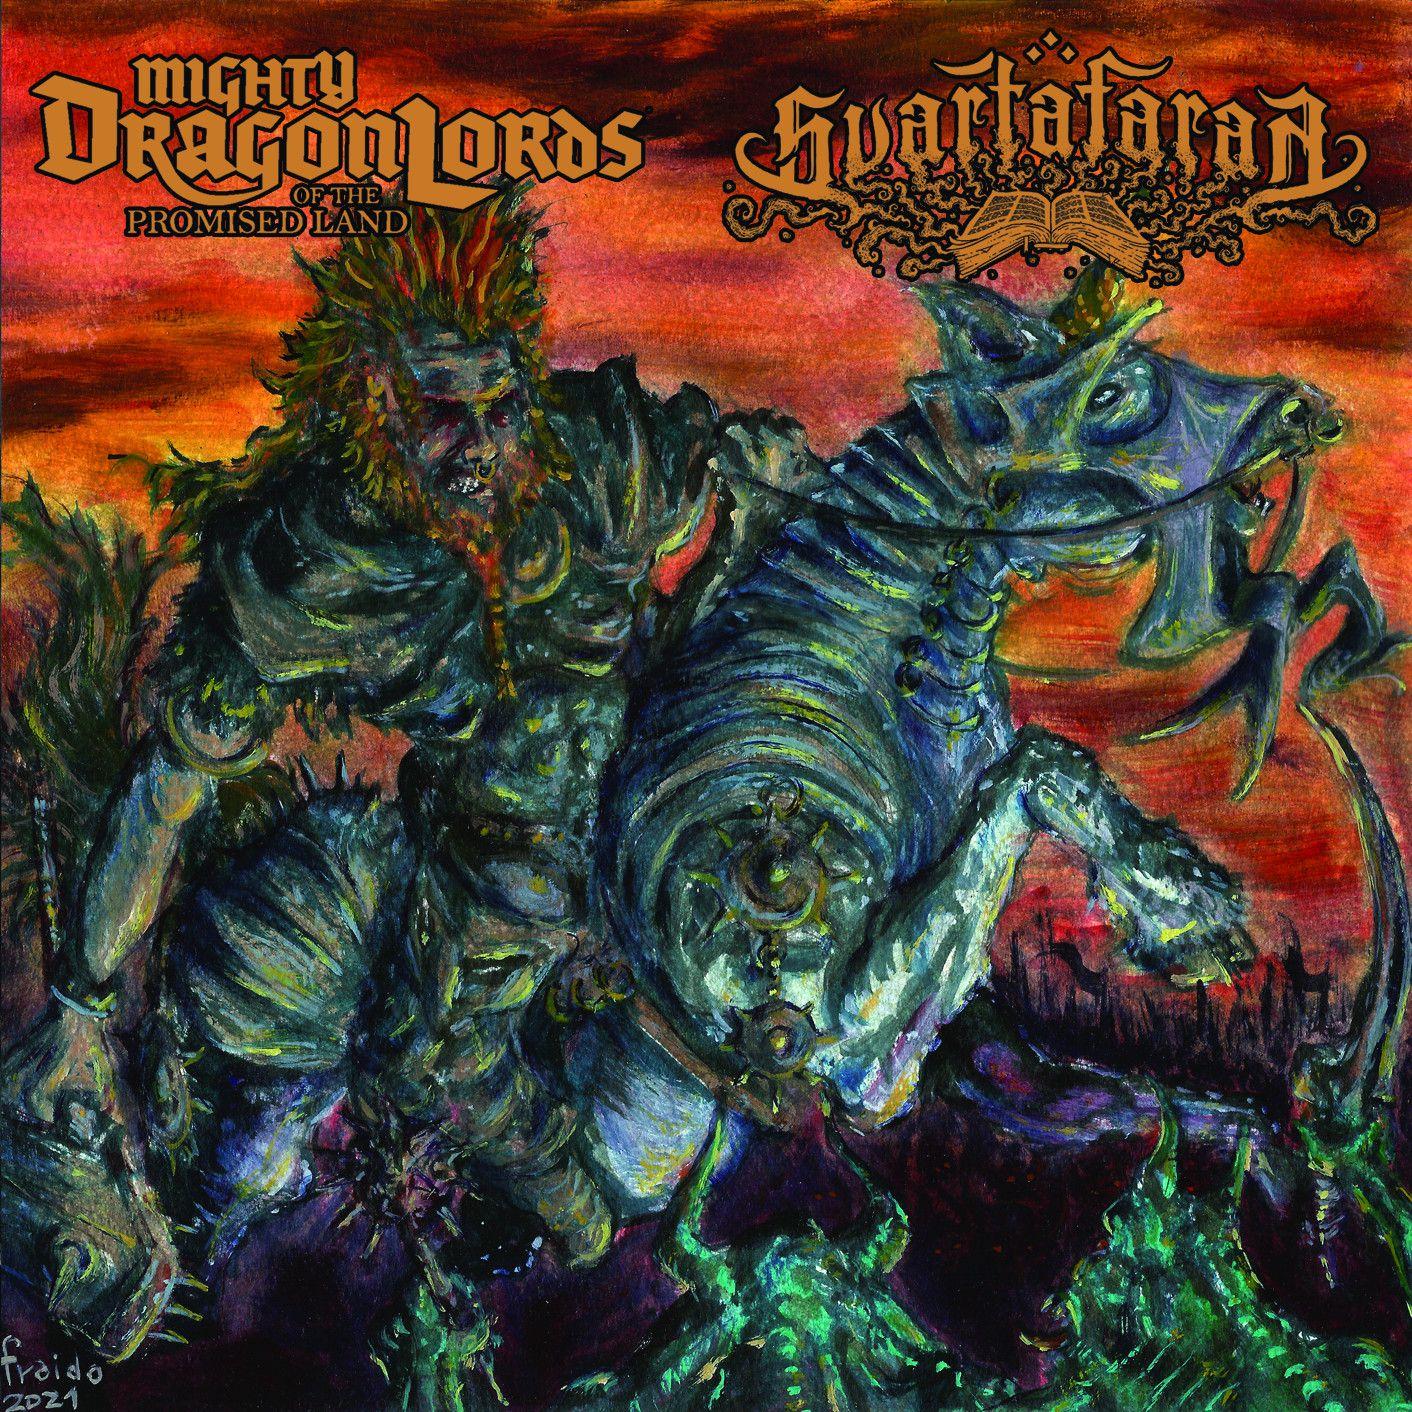 Albumcover Svarta Faran / Mighty Dragonlords